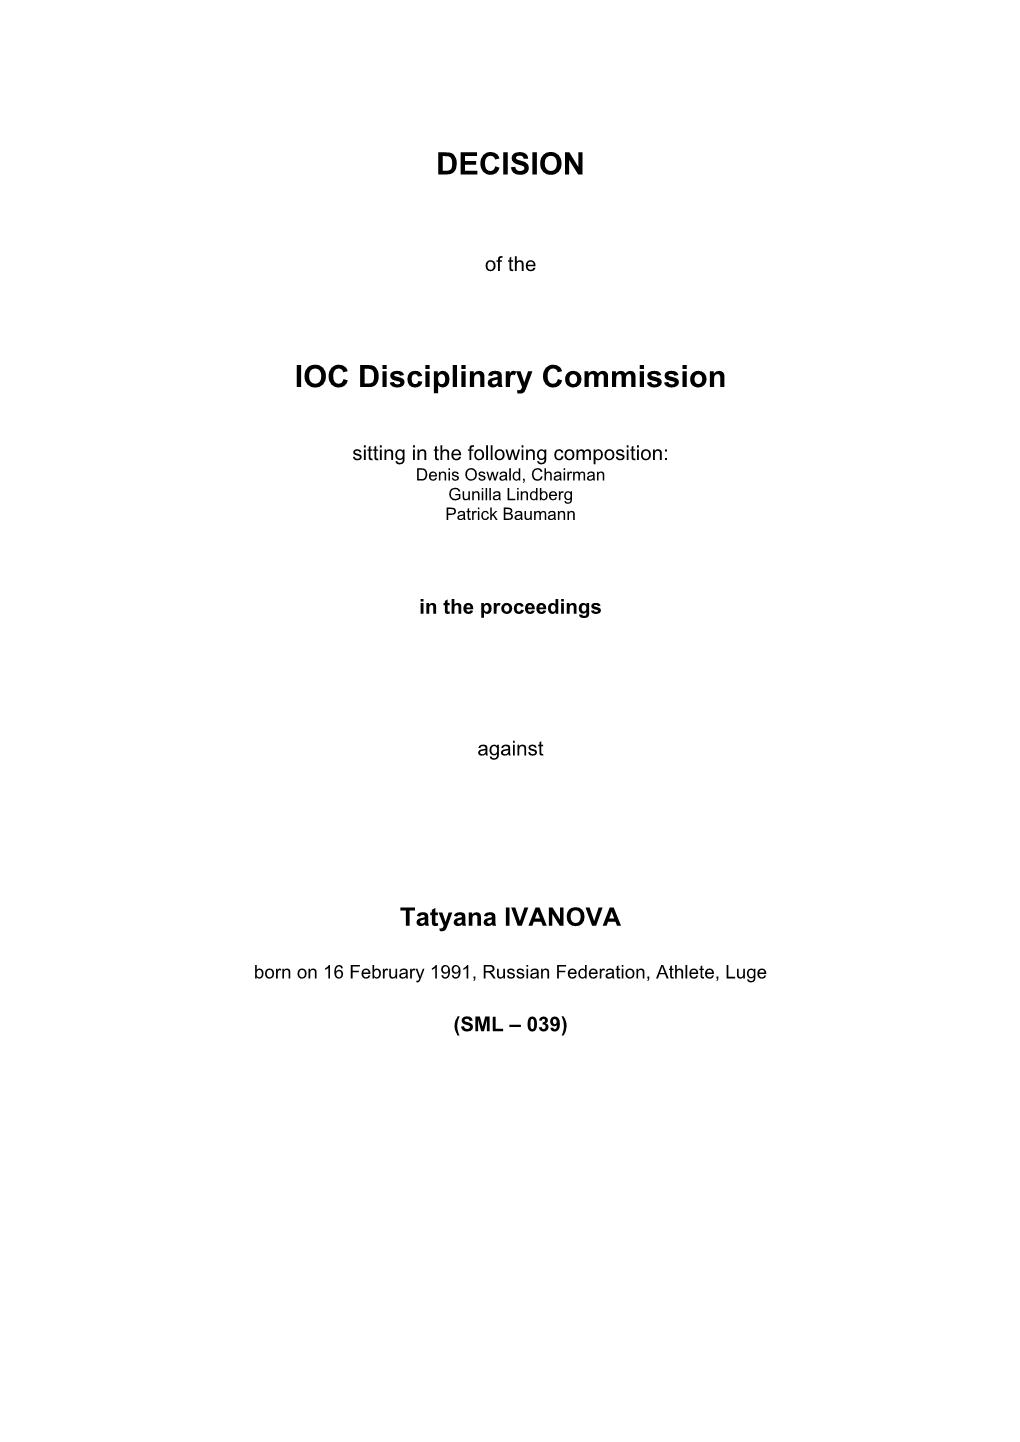 DECISION IOC Disciplinary Commission